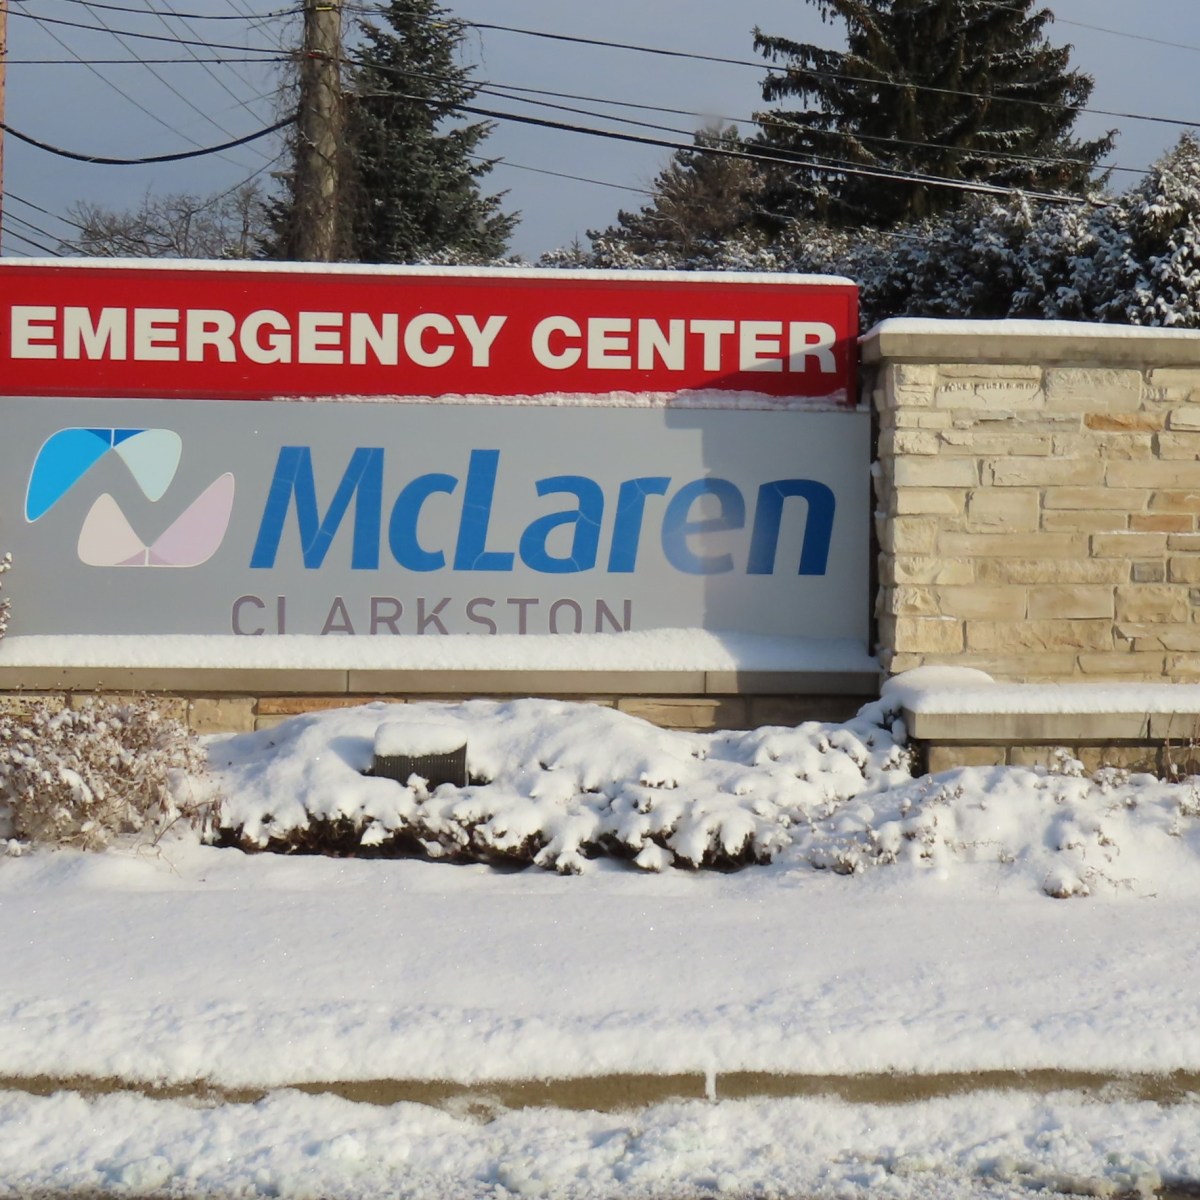 McLaren Clarkston entrance sign in winter